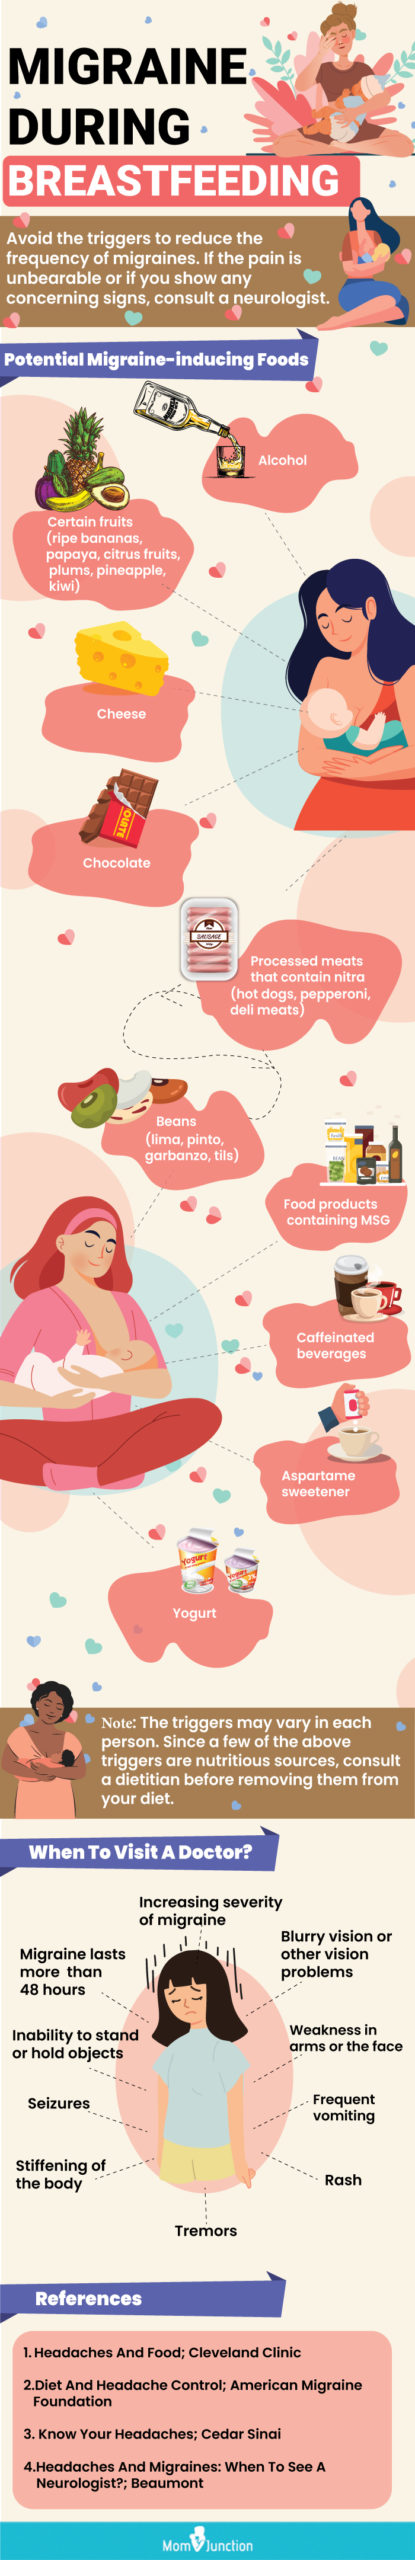 migraine during breastfeeding (infographic)